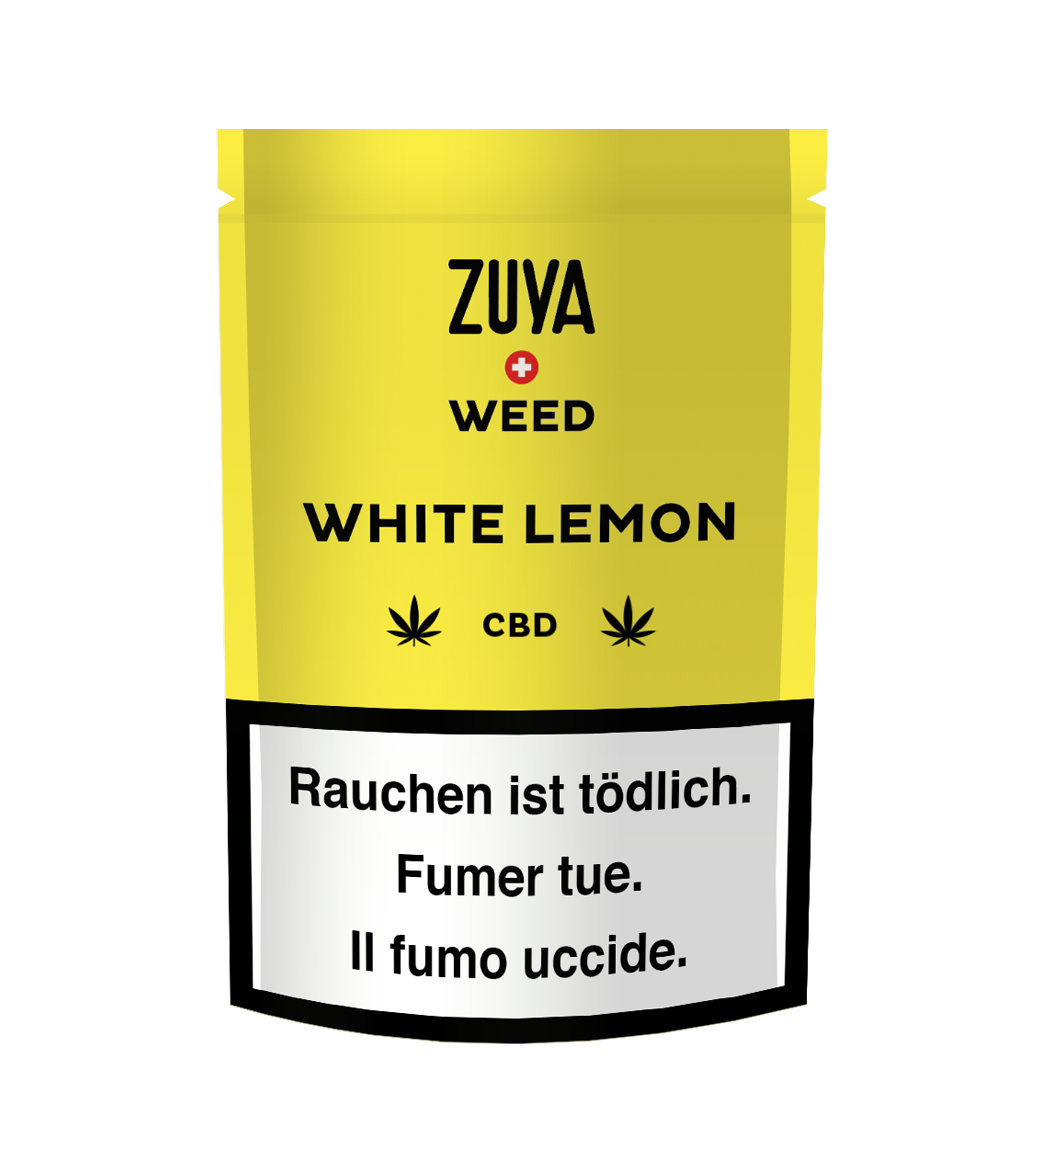 ZUYA Weed WHITE LEMON “on the go” - 2g